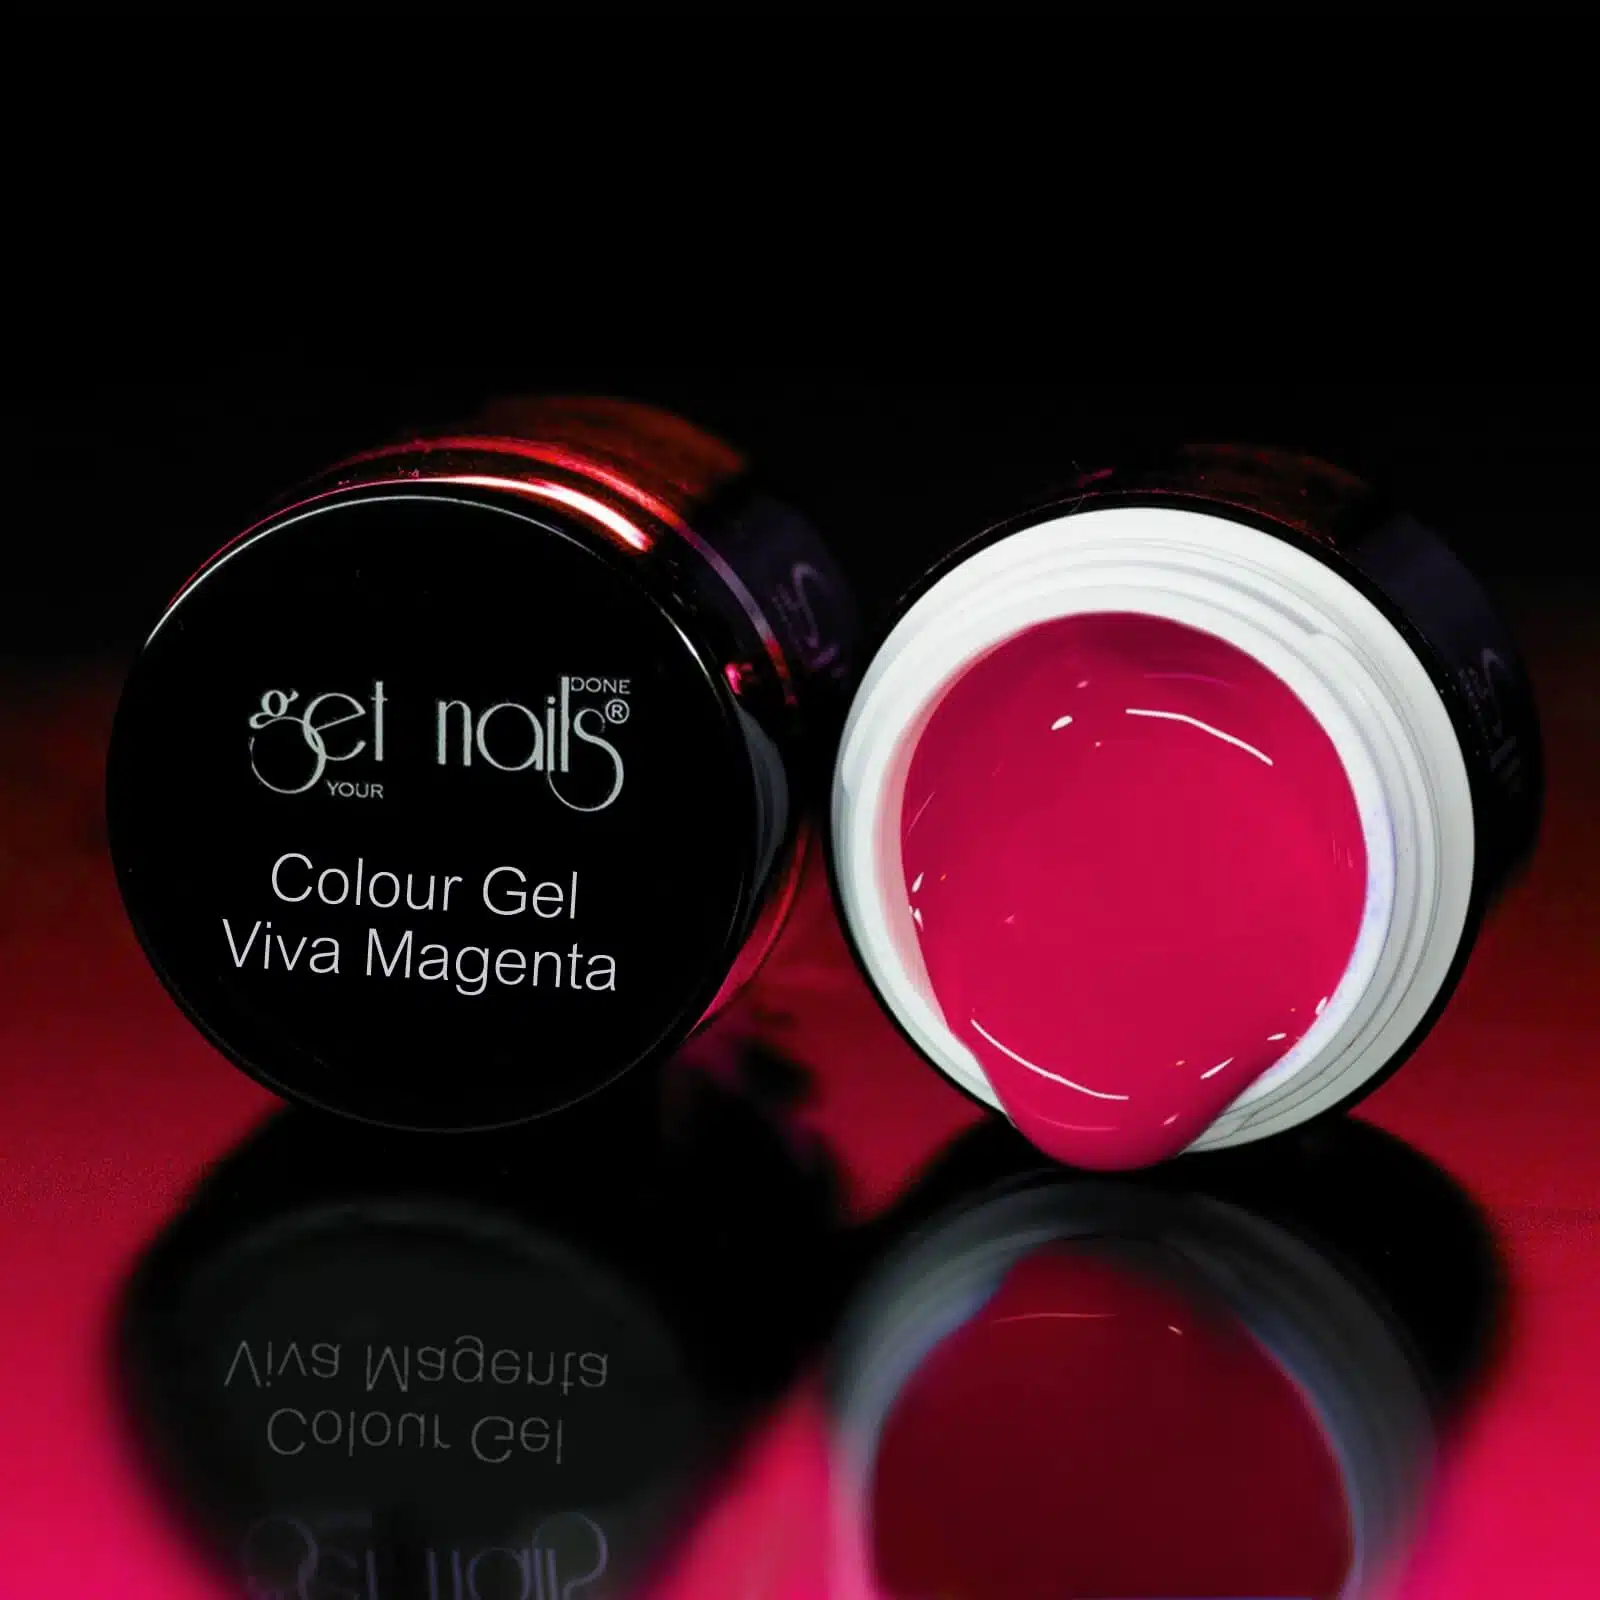 Get Nails Austria - Colour Gel Viva Magenta 5g 2